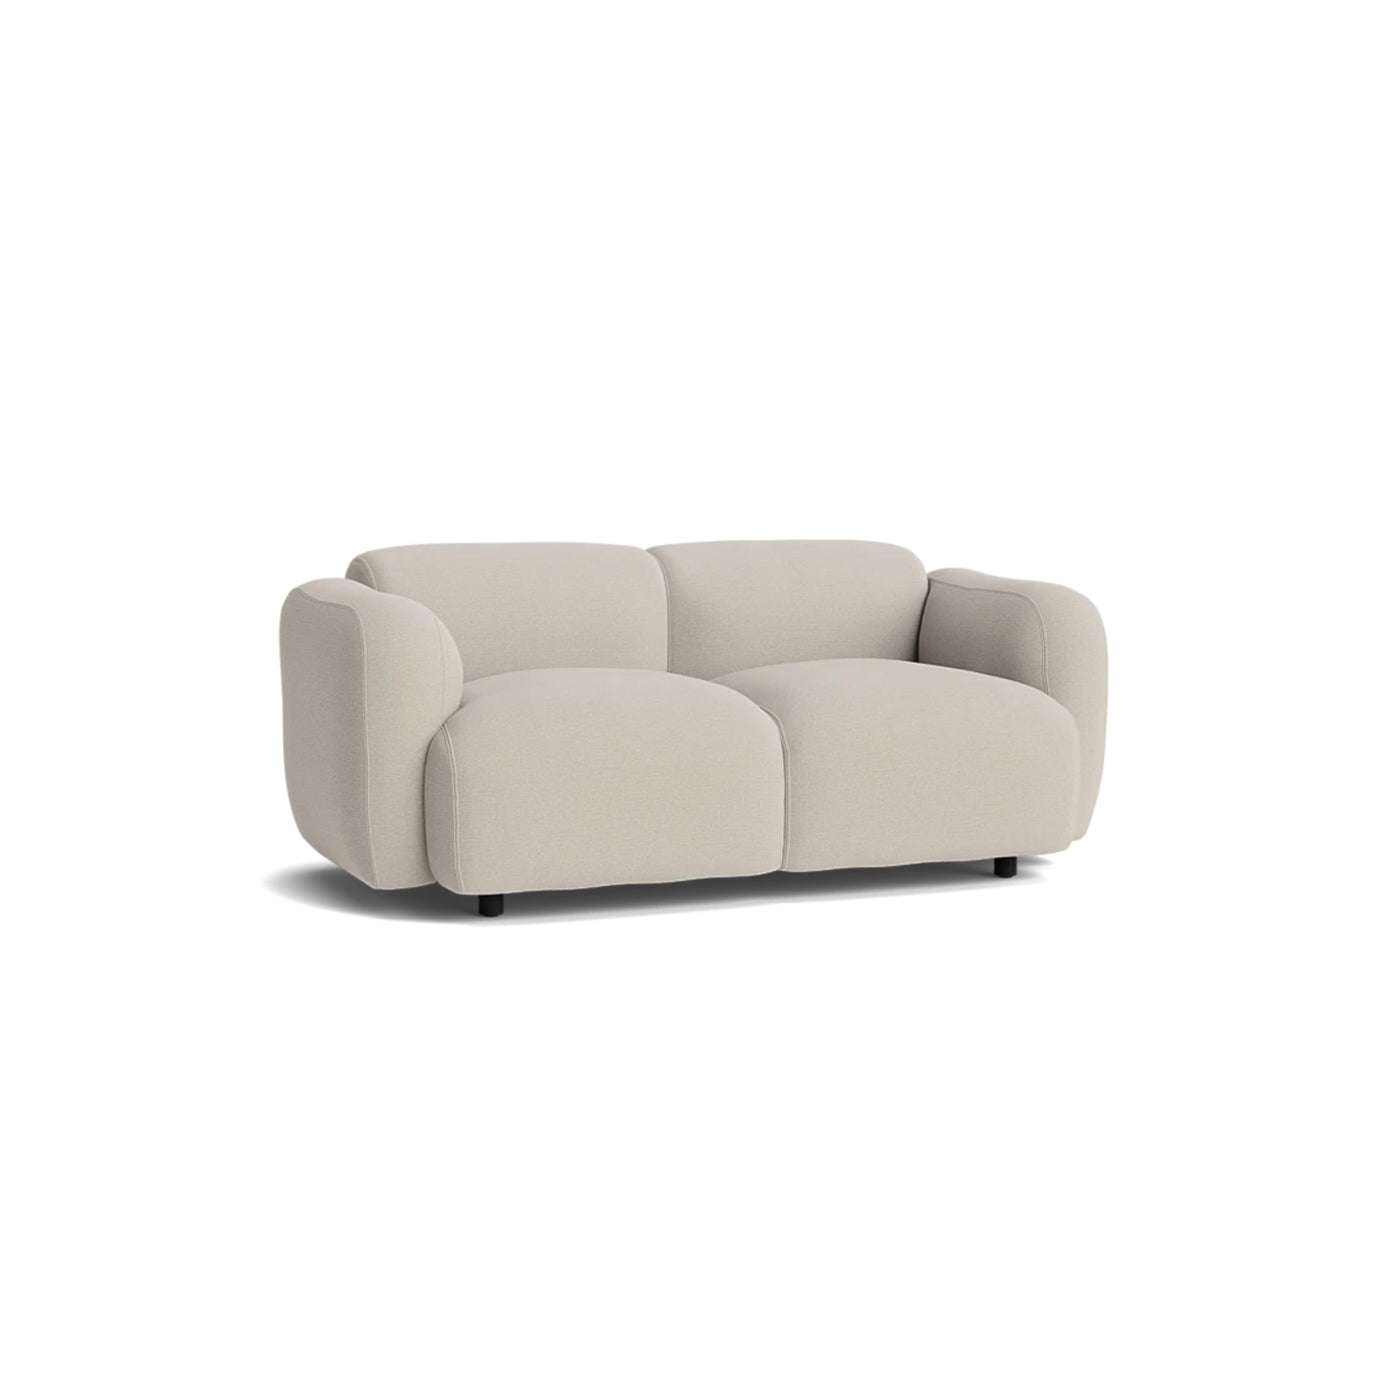 Normann Copenhagen Swell 2 Seater Sofa at someday designs. #colour_steelcut-trio-213